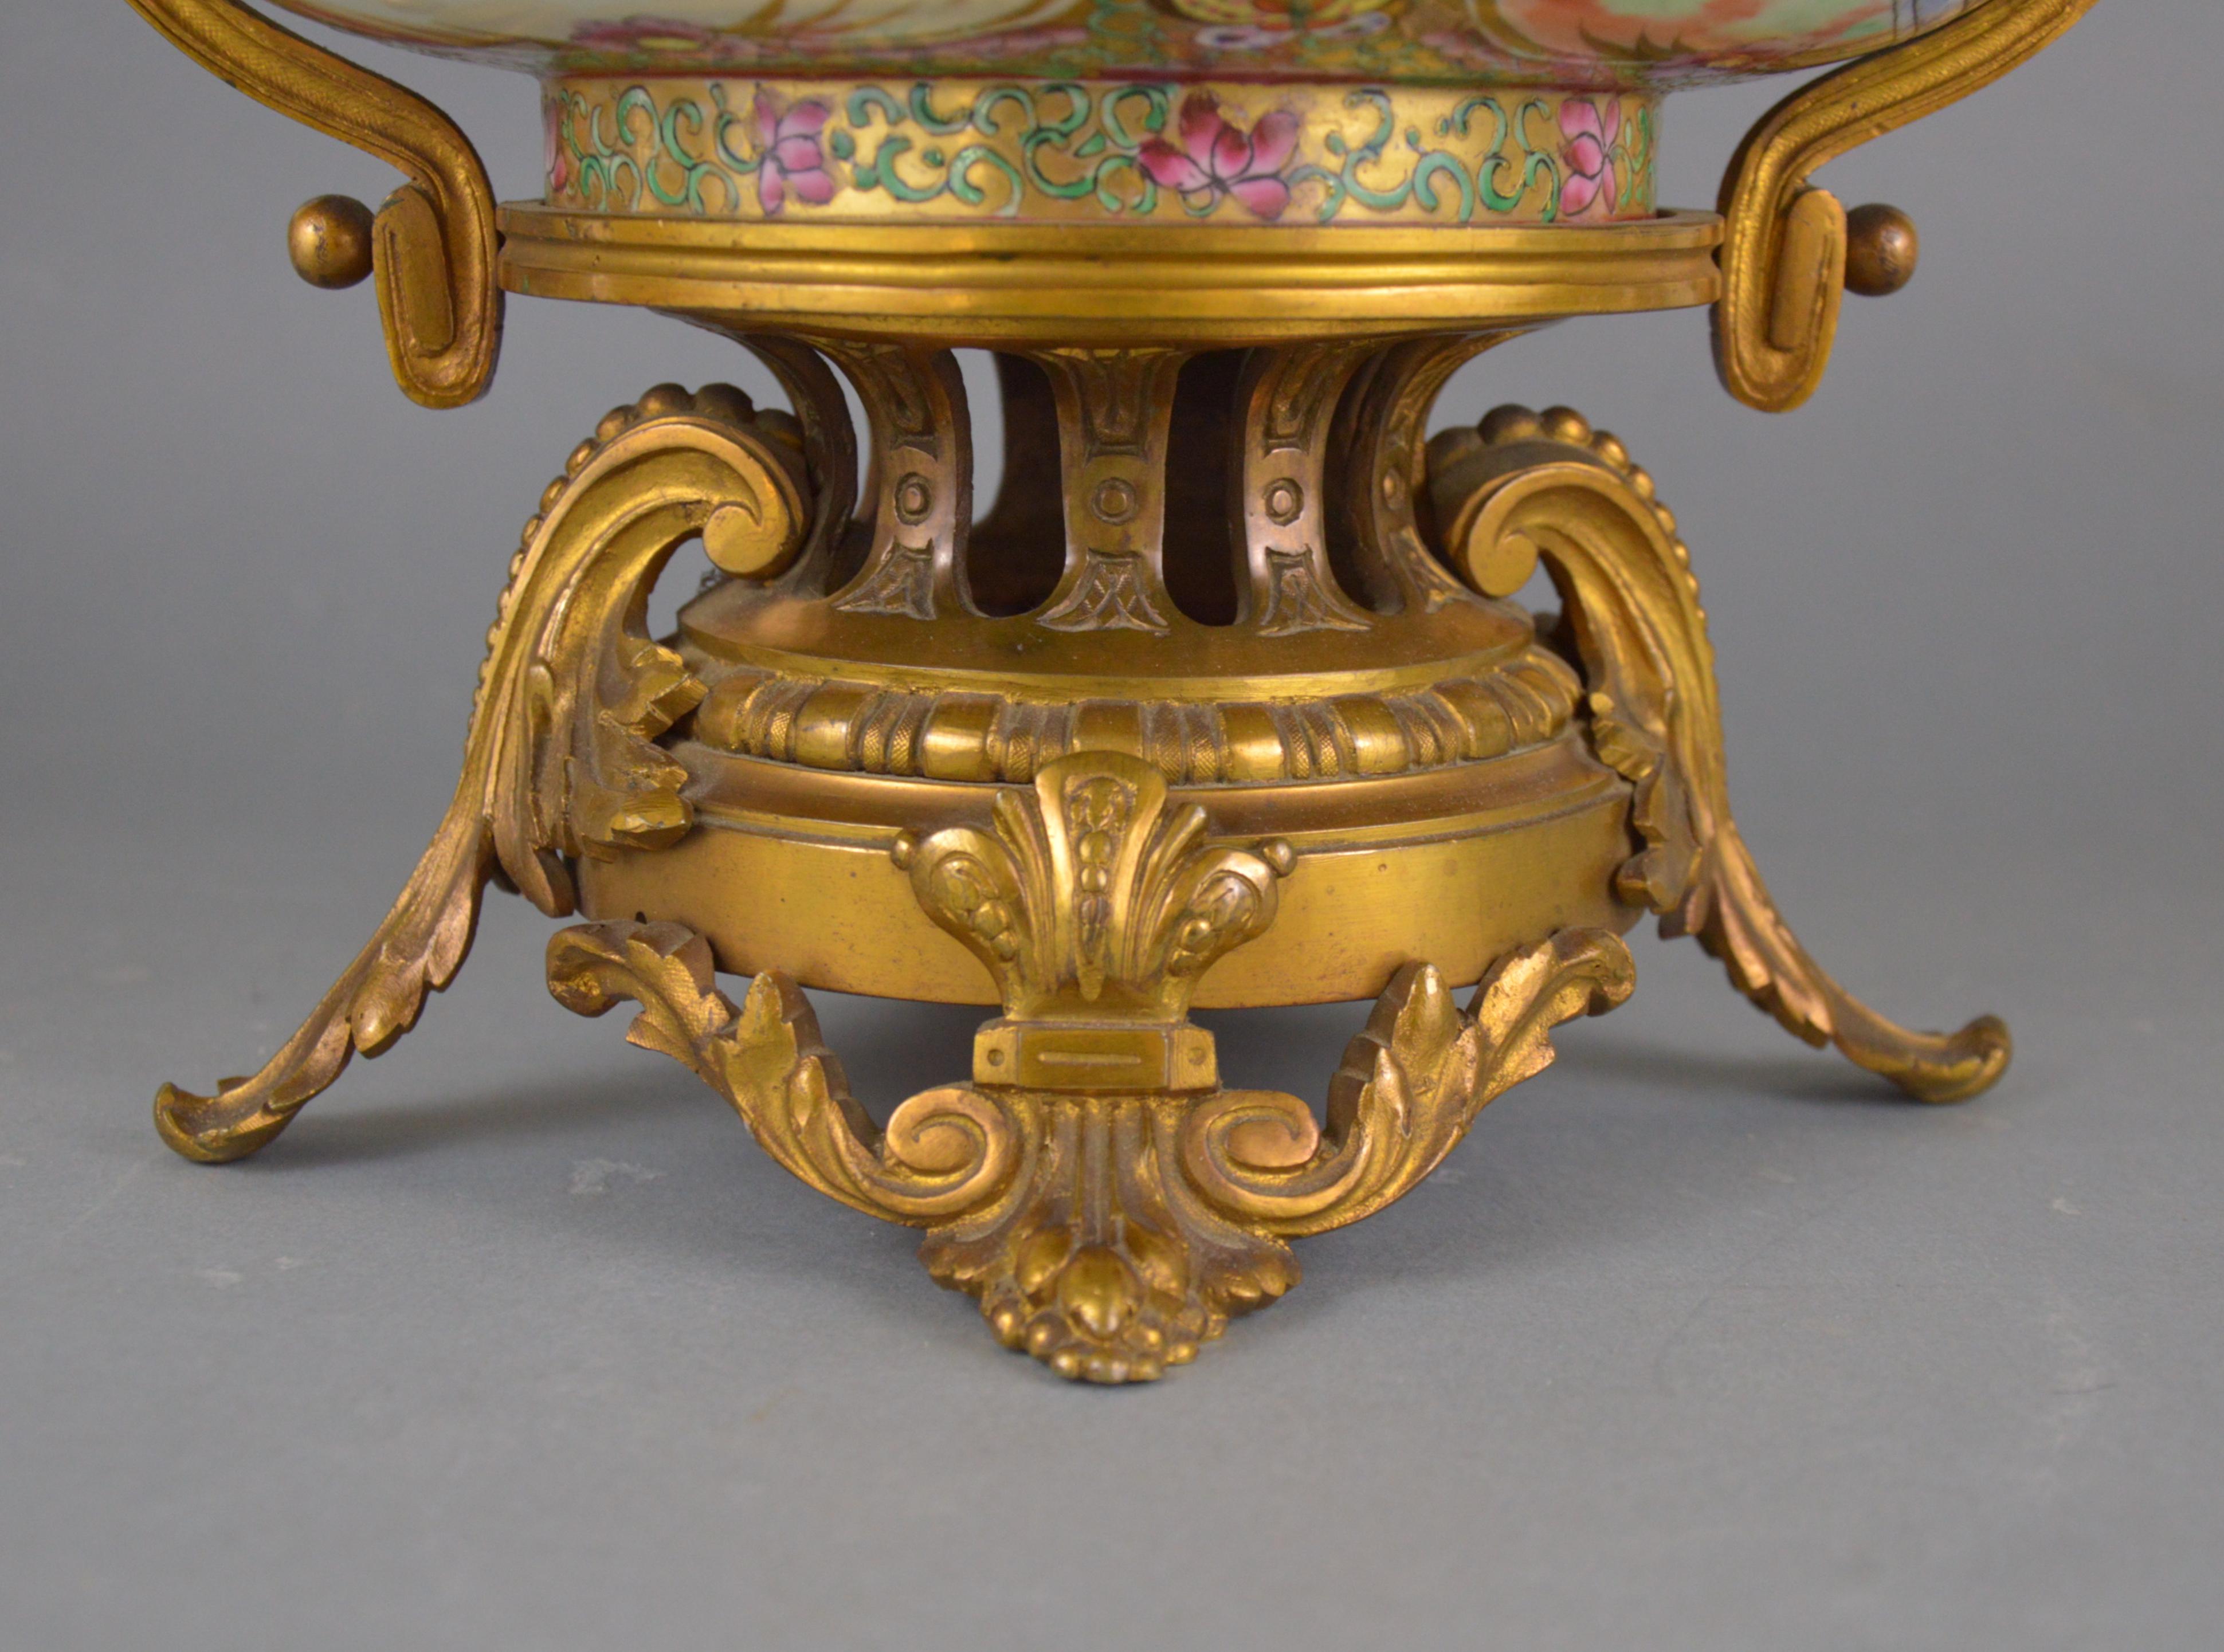 19th Century Chinese Gilt Bronze-Mounted Canton Porcelain Bowl (19. Jahrhundert)